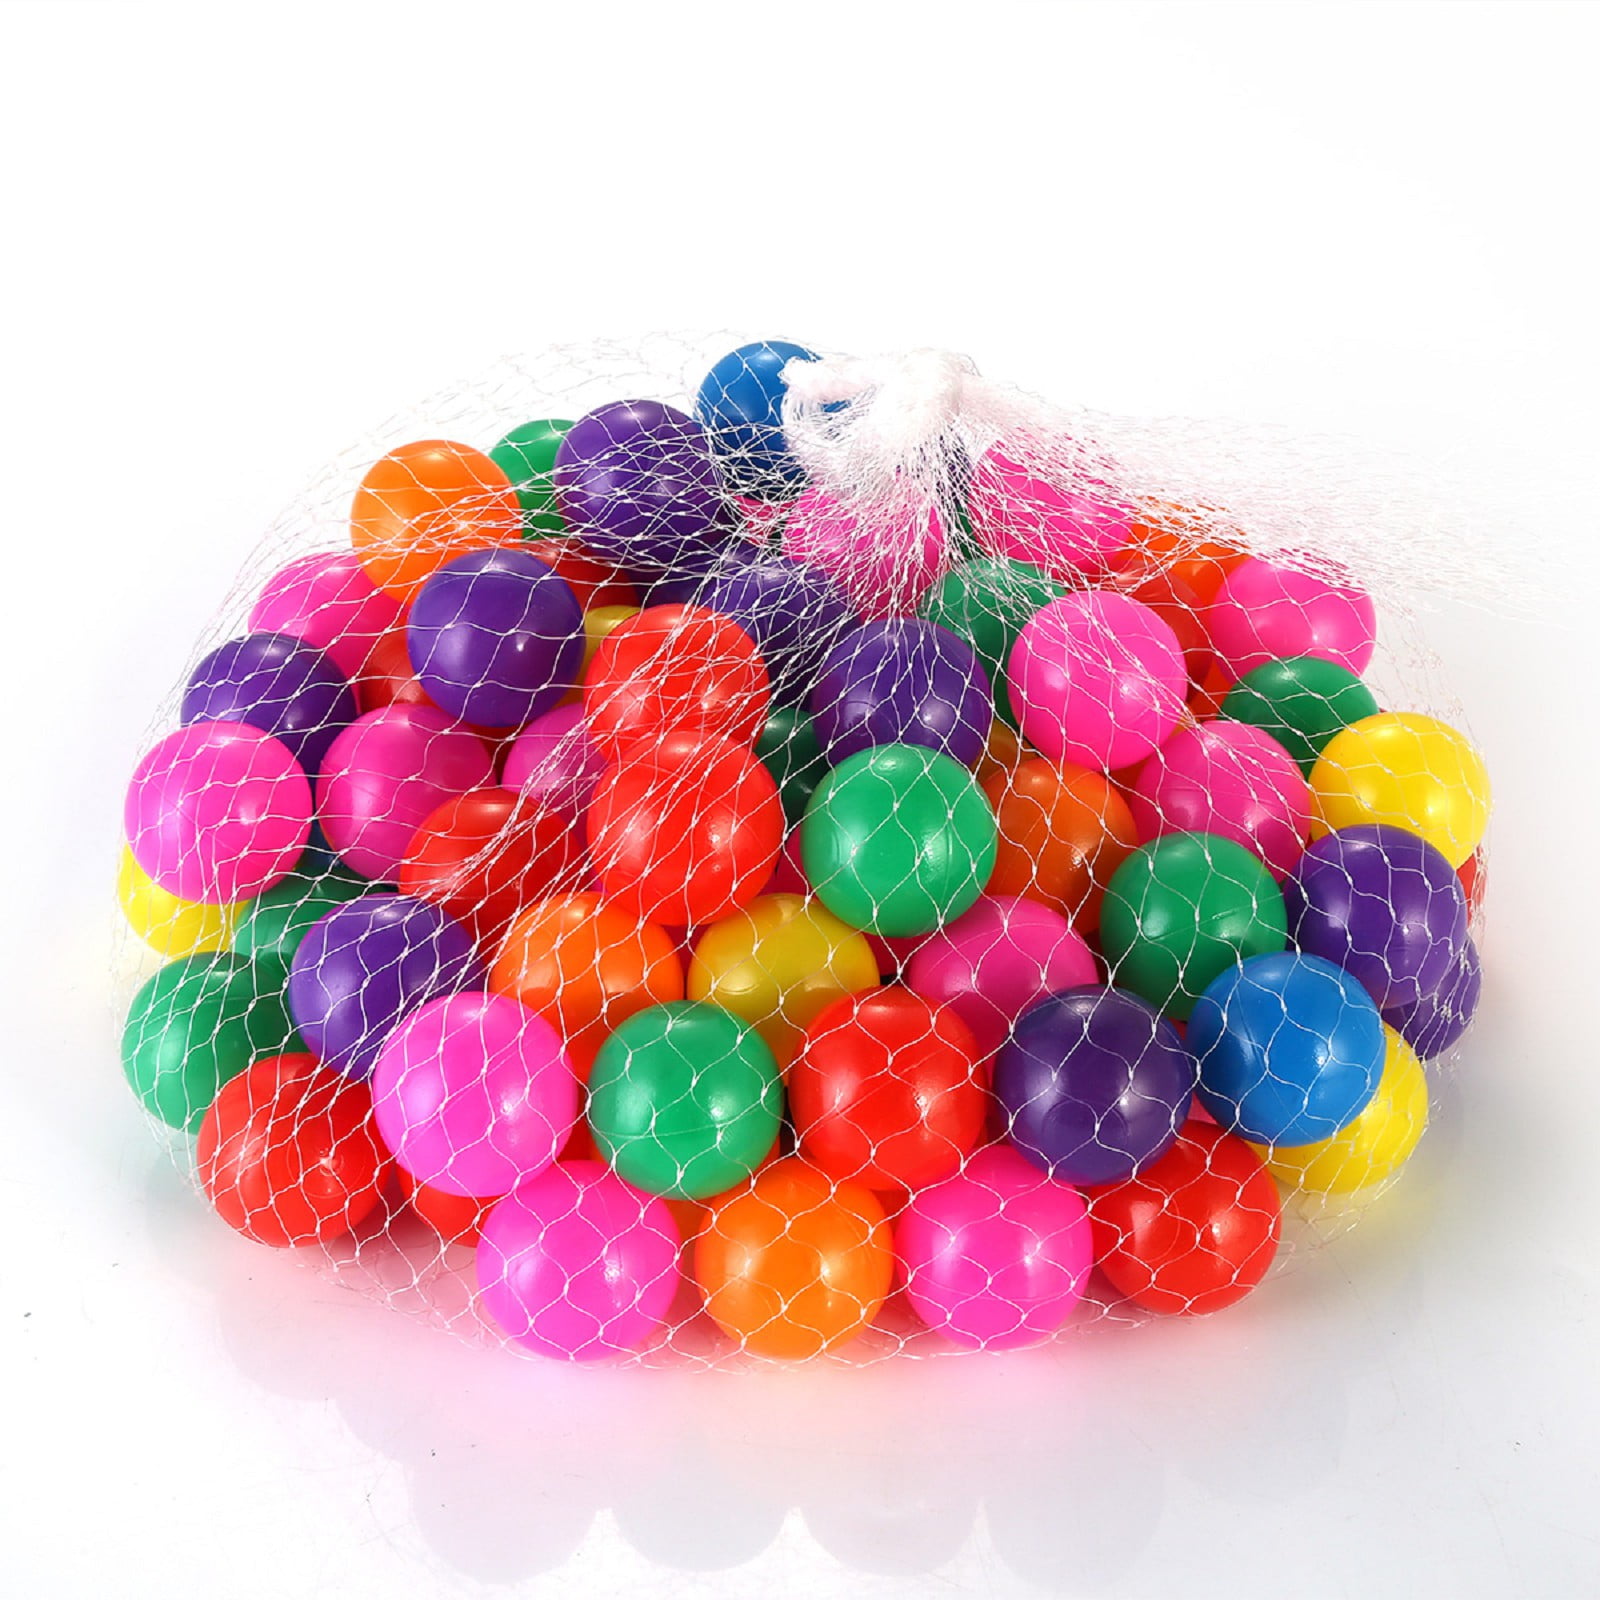 Details about   Kids Ball Pit Balls Storage Net Bag Toys Organizer Balls Decor For 200 J7J7 